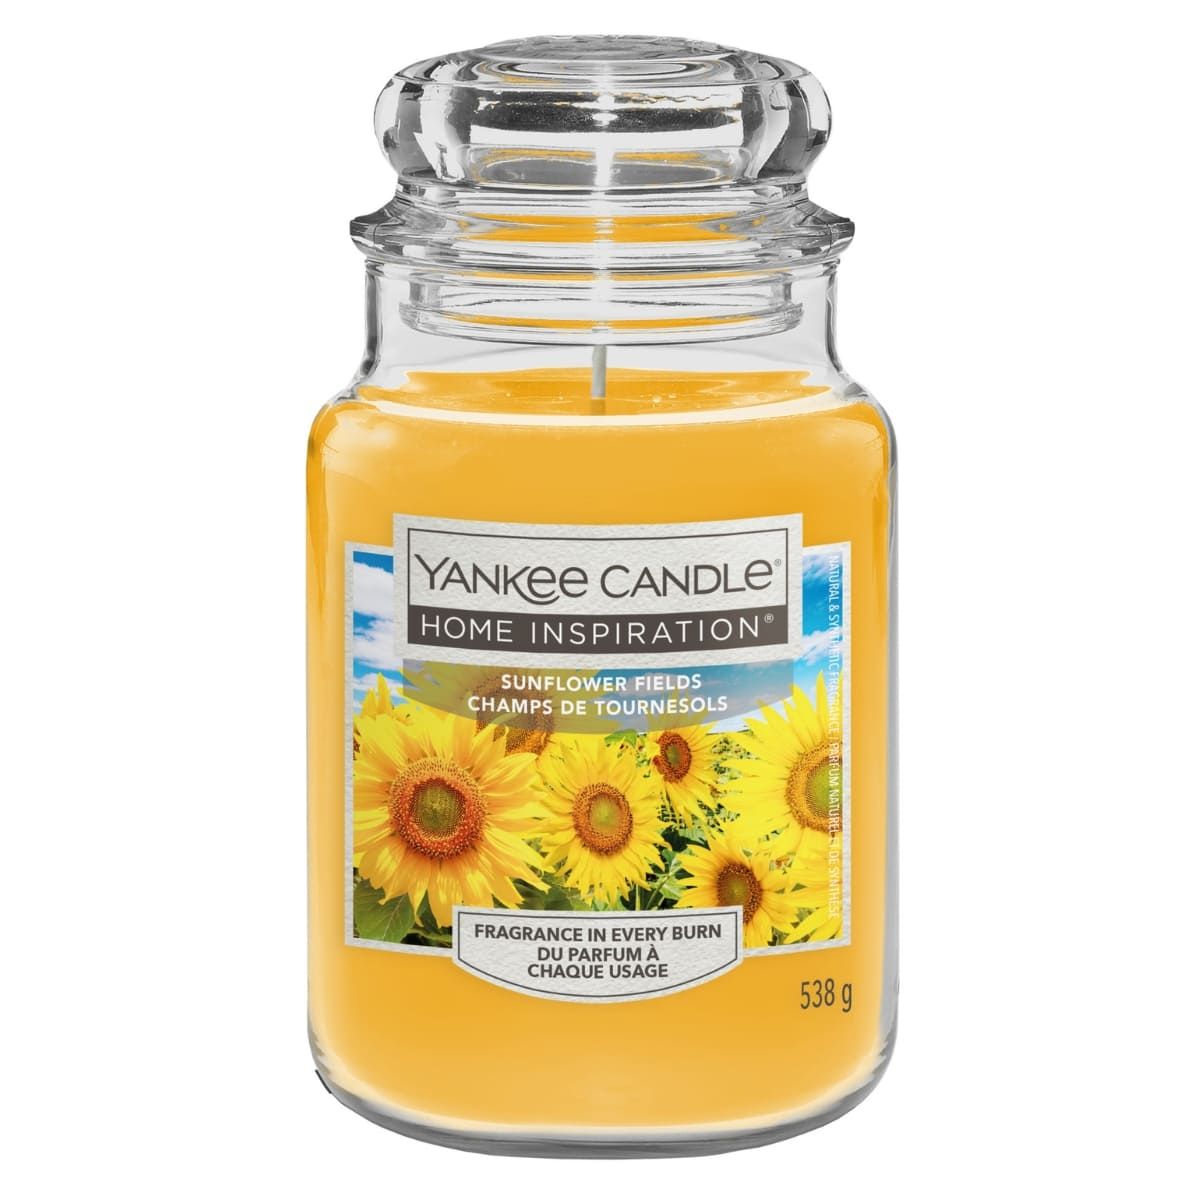 Ароматическая Свеча Yankee Candle Home Inspiration Sunflower Fields, 538 гр yankee candle home inspiration ароматическая свеча утреннее блаженство 538 г